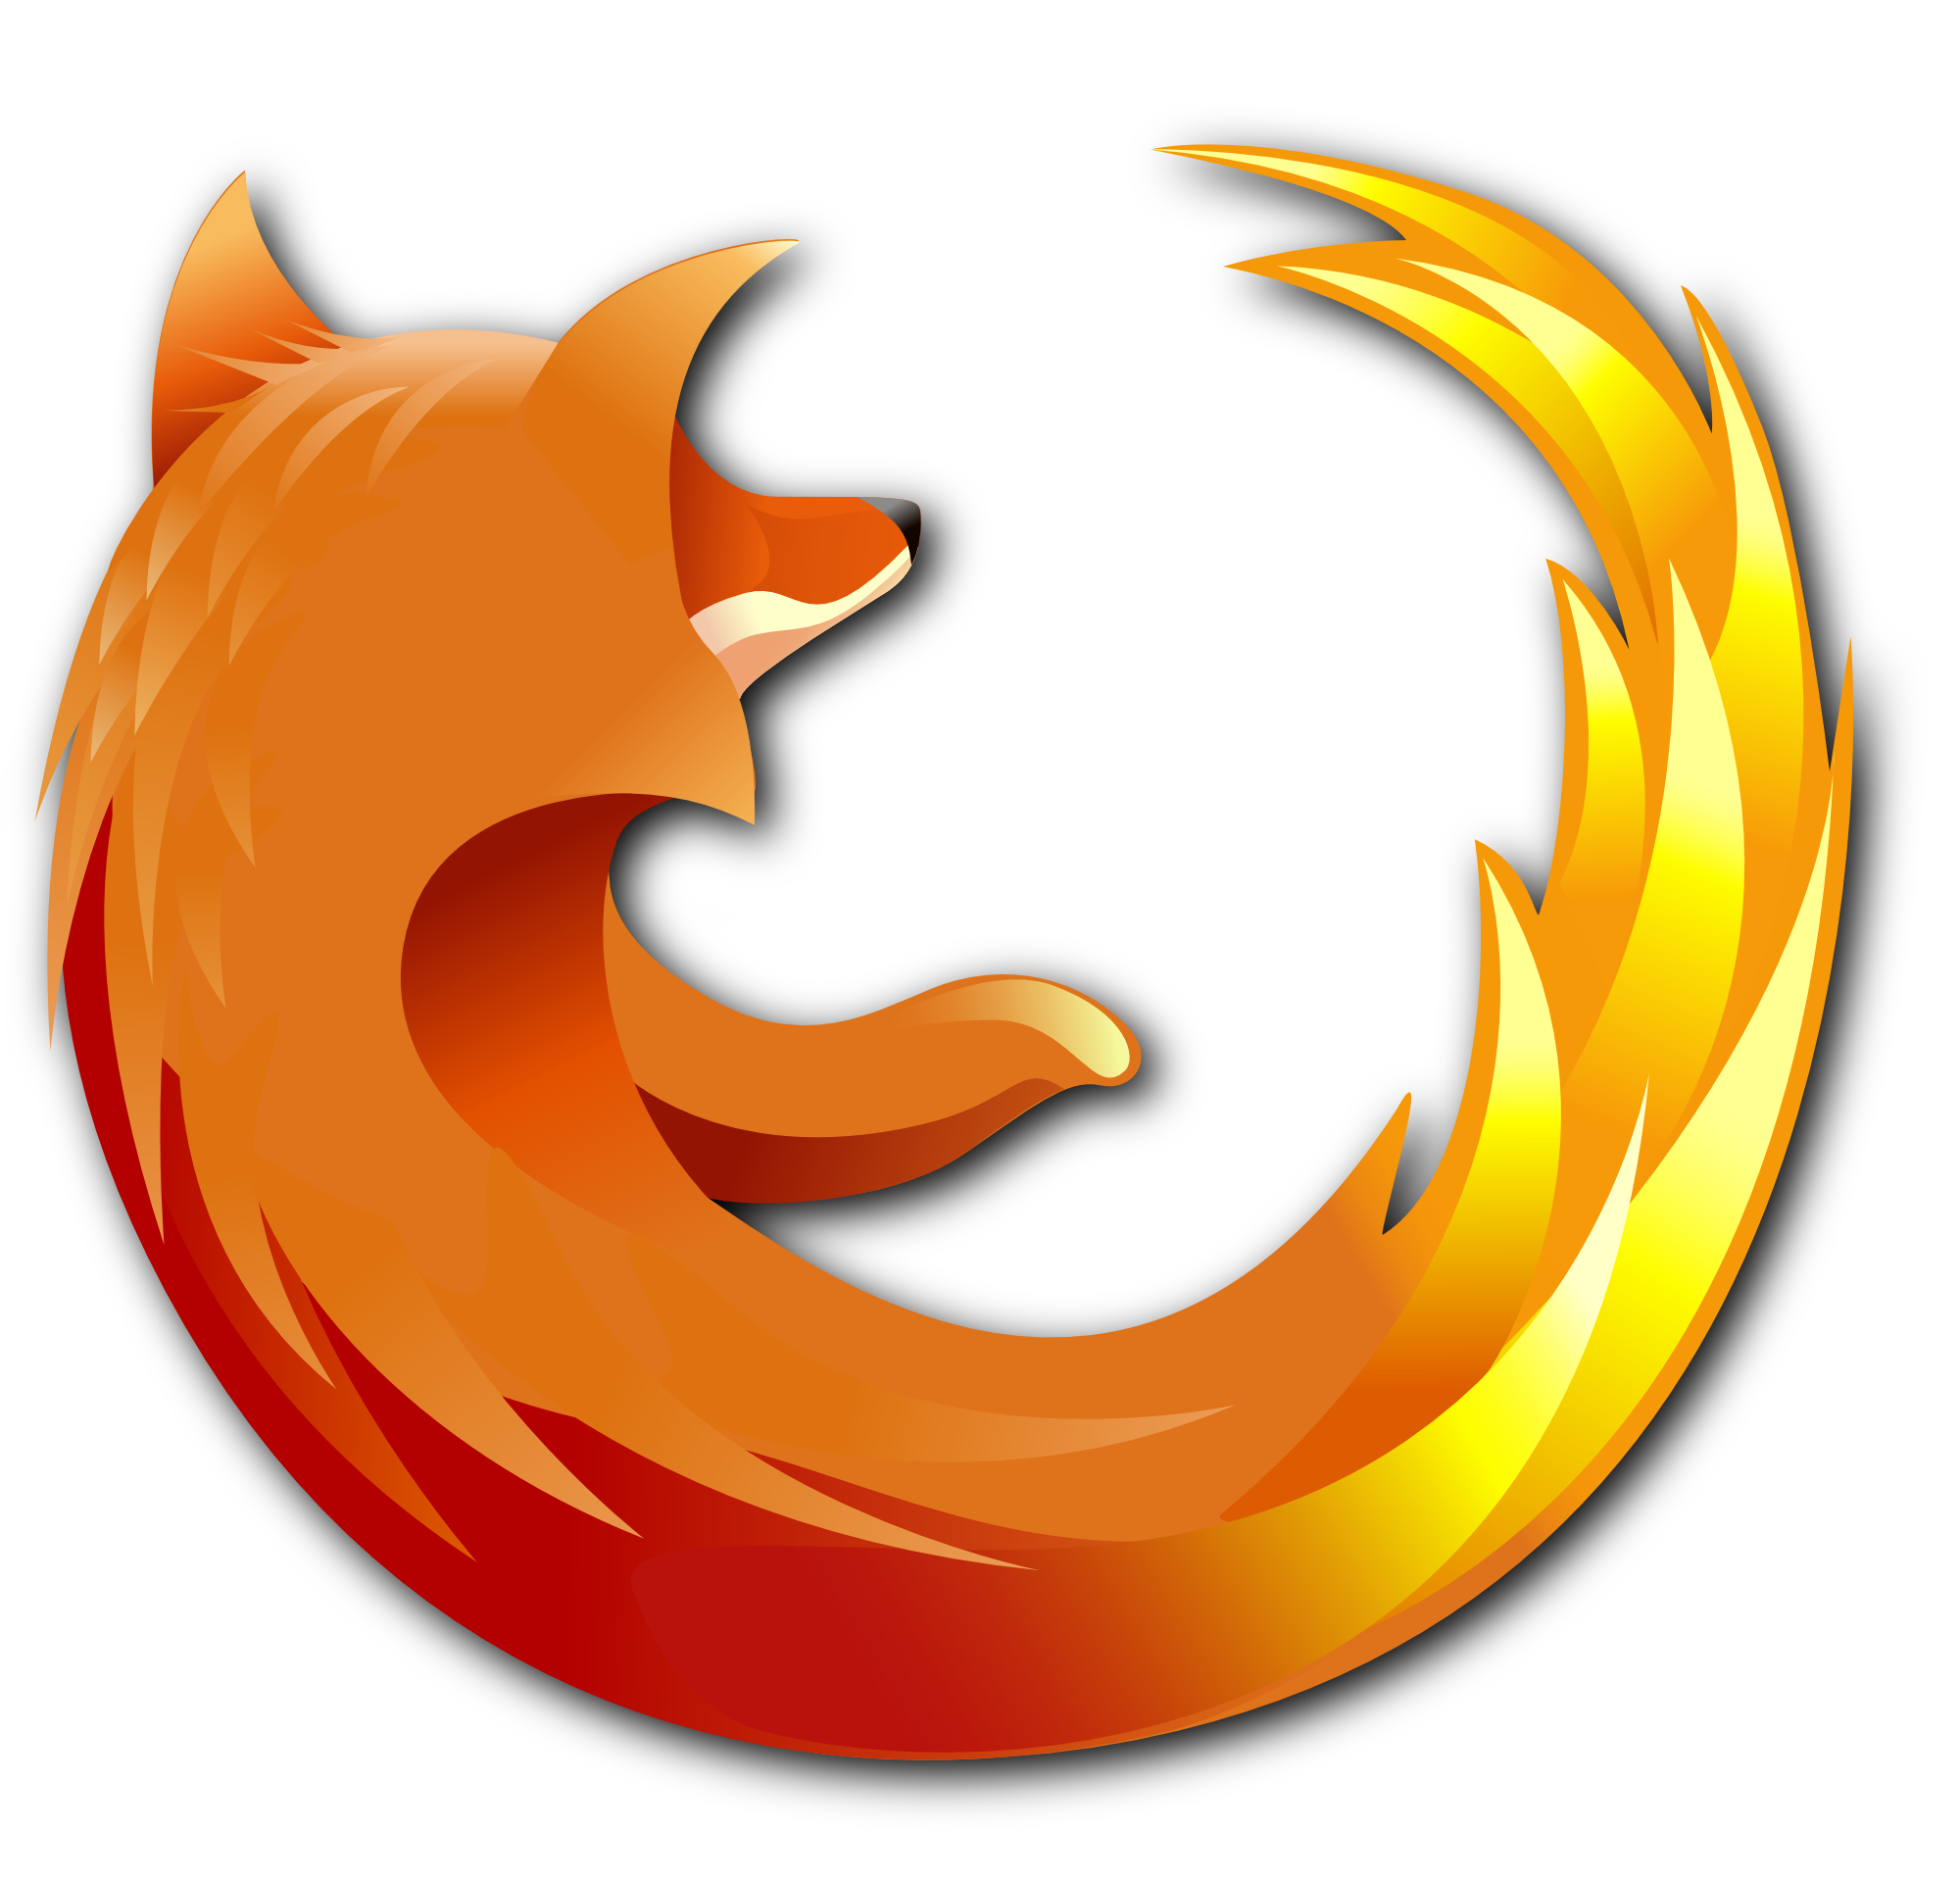 Firefox logo without globe by balcsida on DeviantArt